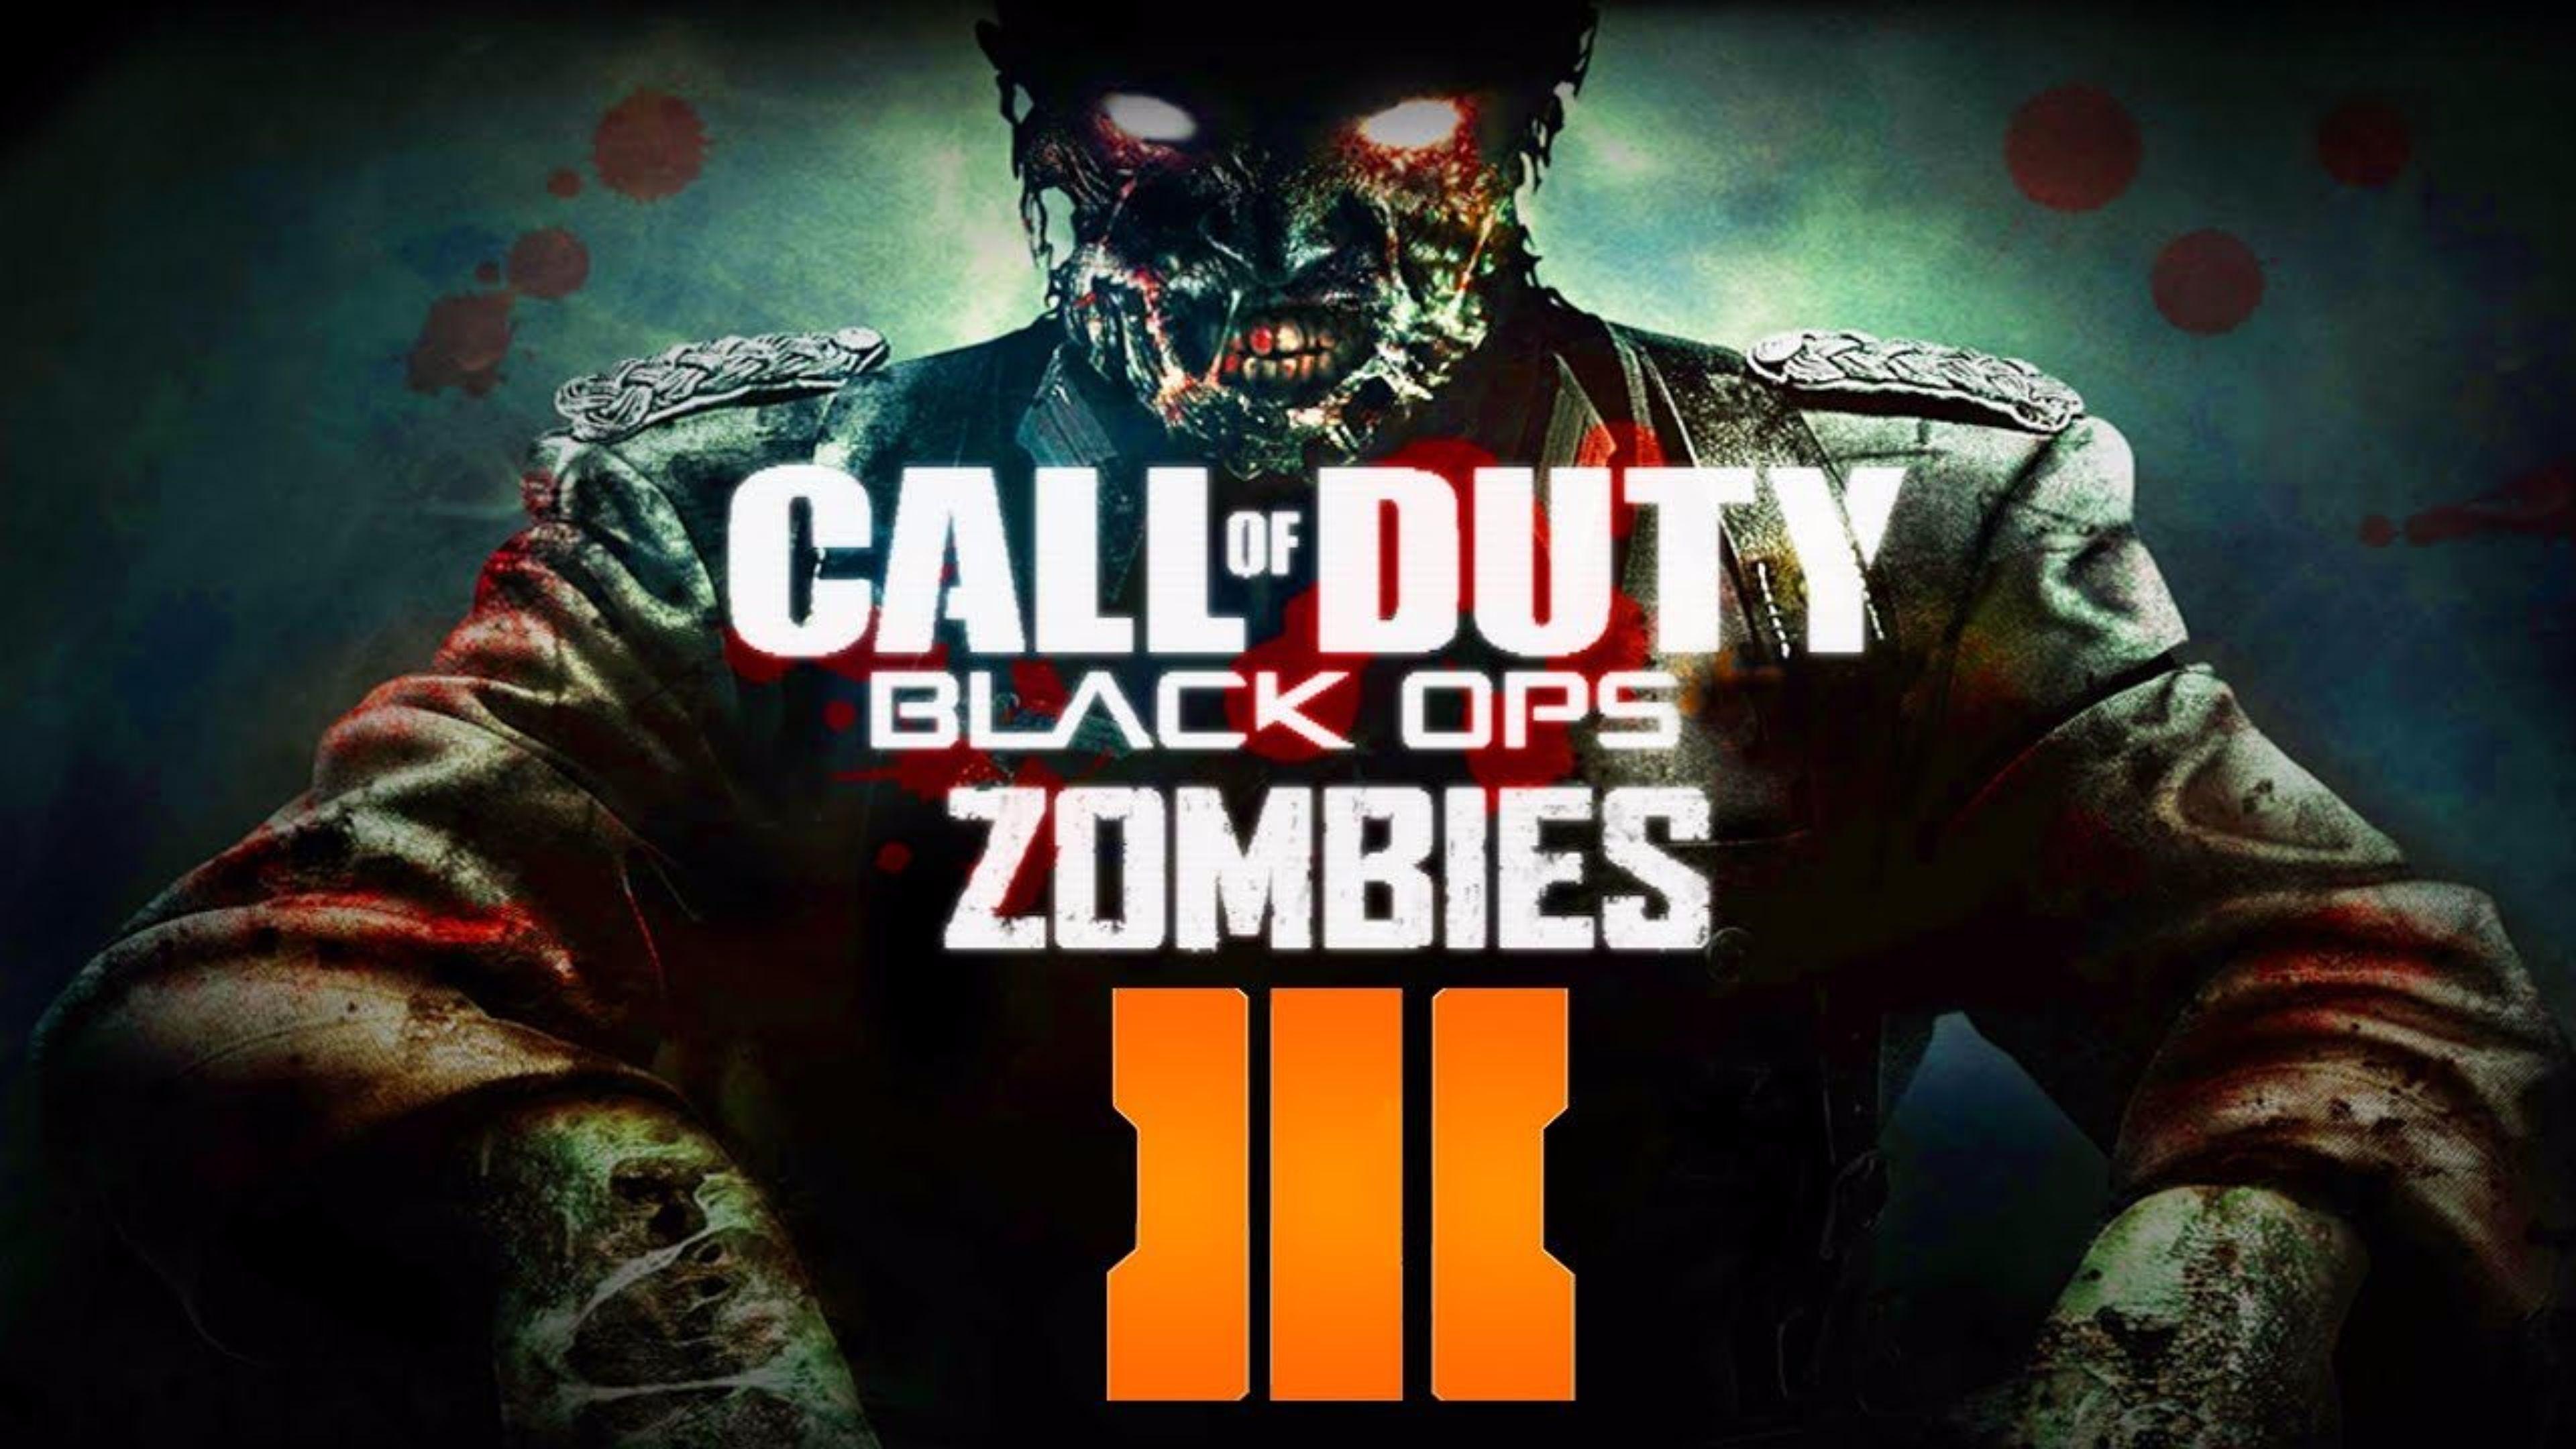 Zombies Call of Duty Black Ops 3 4K Wallpaper. Free 4K Wallpaper